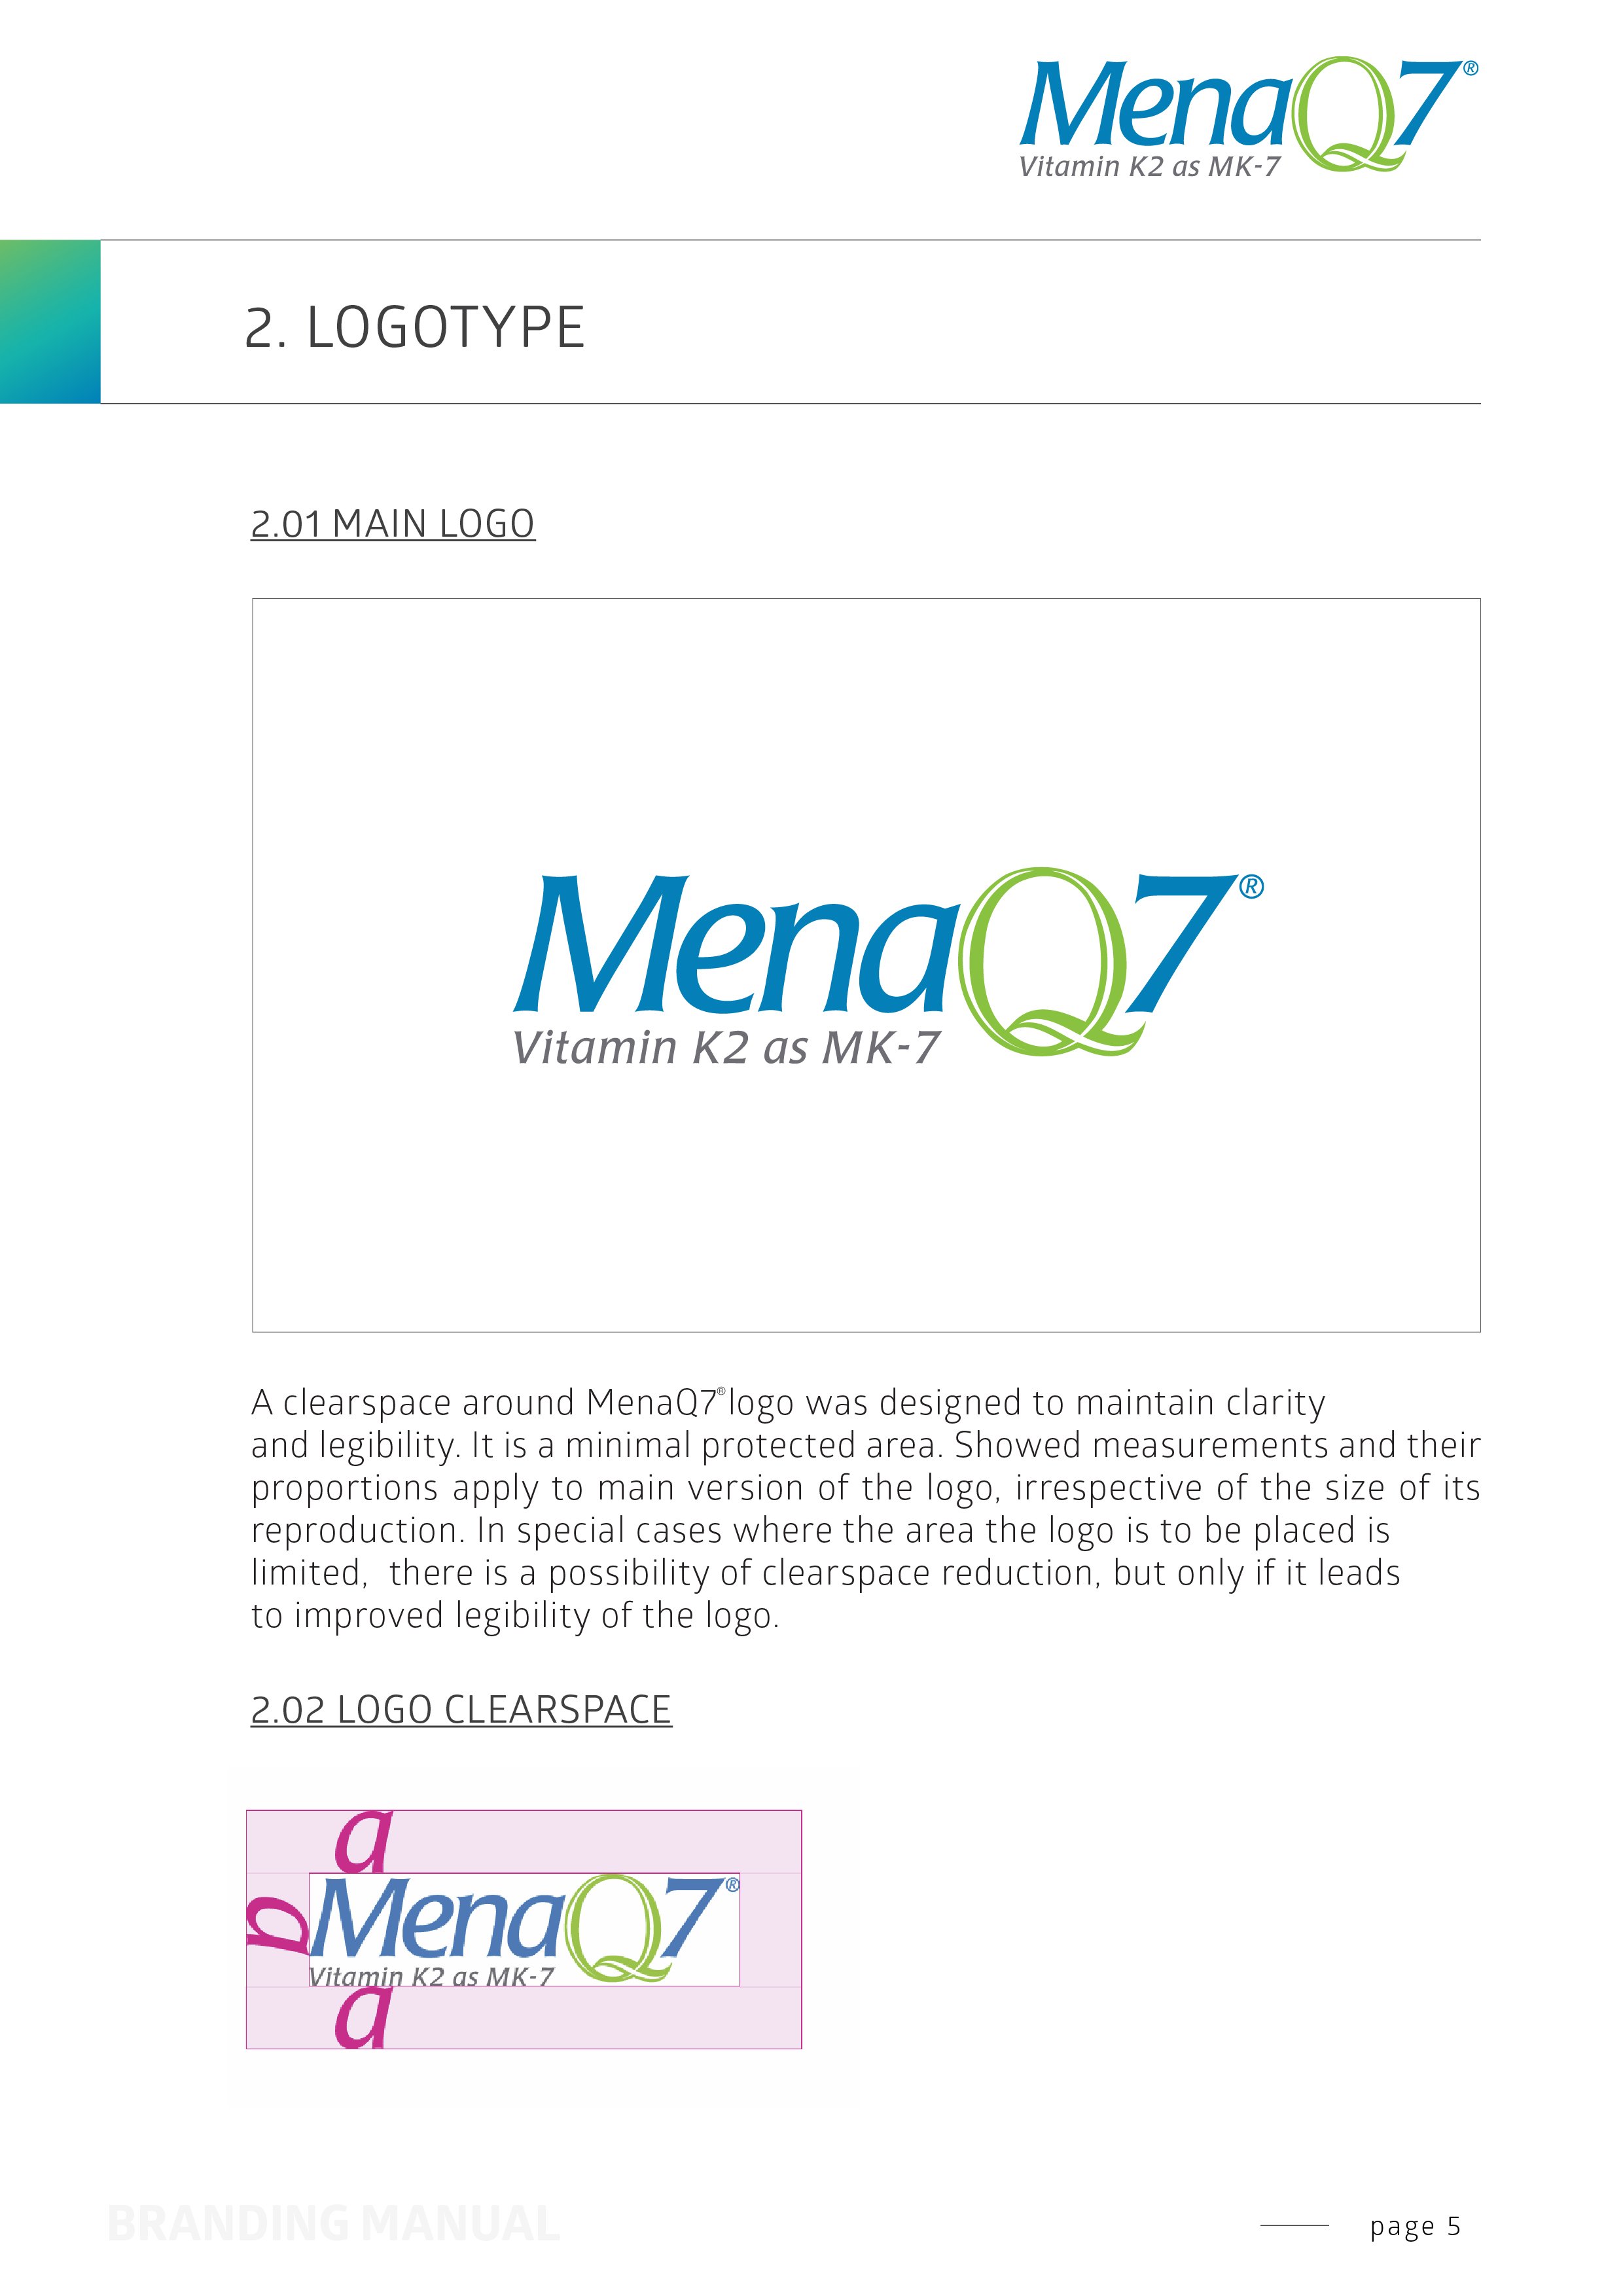 MQ7_ brand manual for distributors_MP_20140714-04.jpg